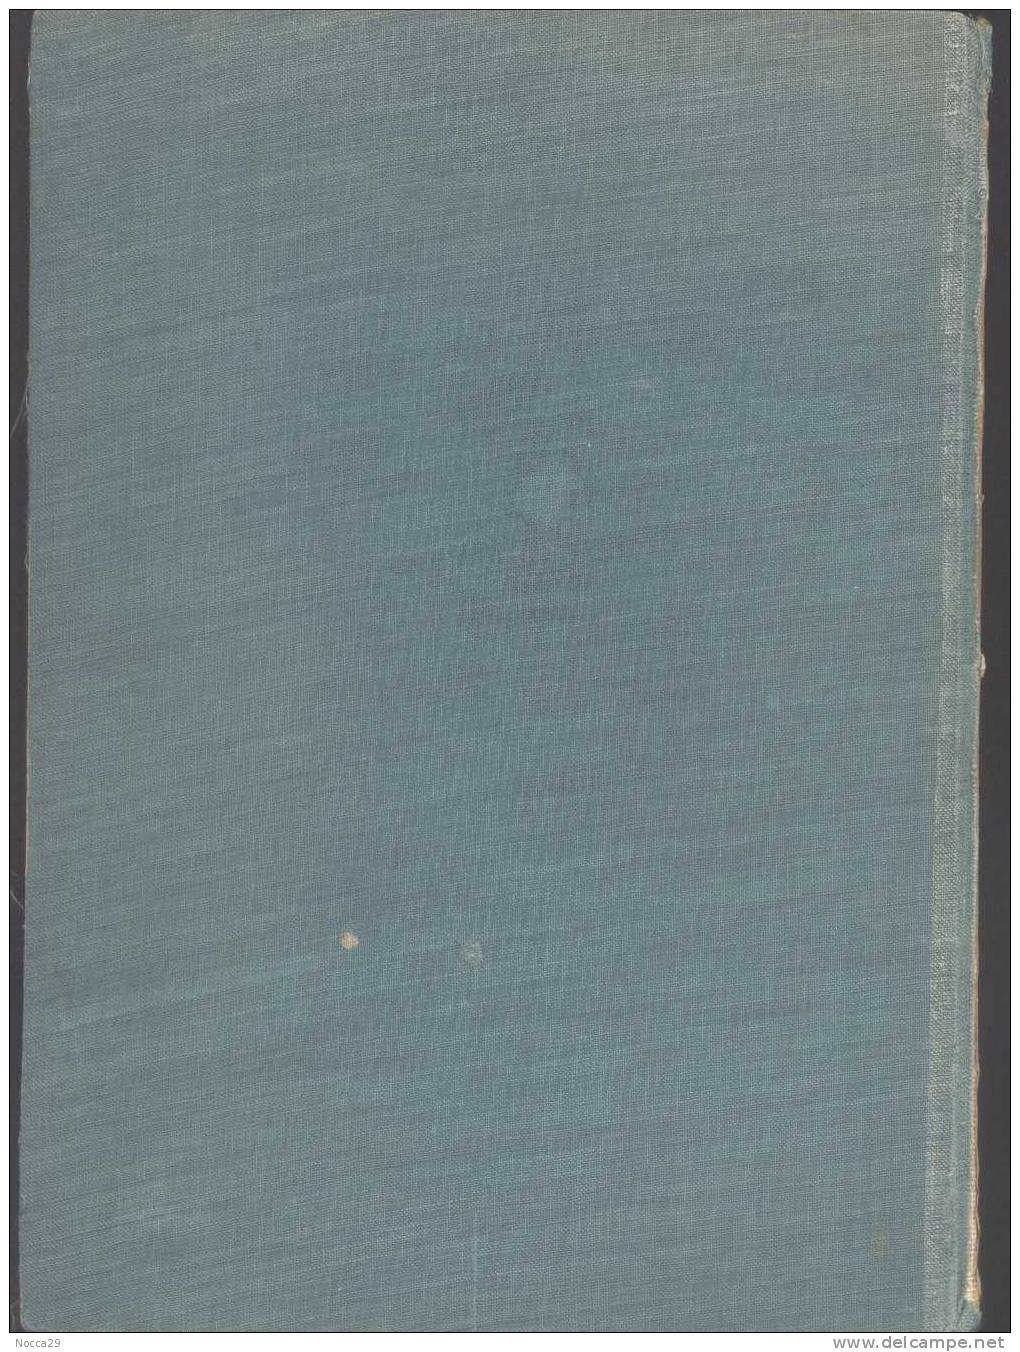 AUF KUNDFAHRT IM JMALAJA - 1937 - SPEDIZIONE SULL'HYMALAIA - ALPINISMO. ORIGINALE! - Biographies & Mémoirs